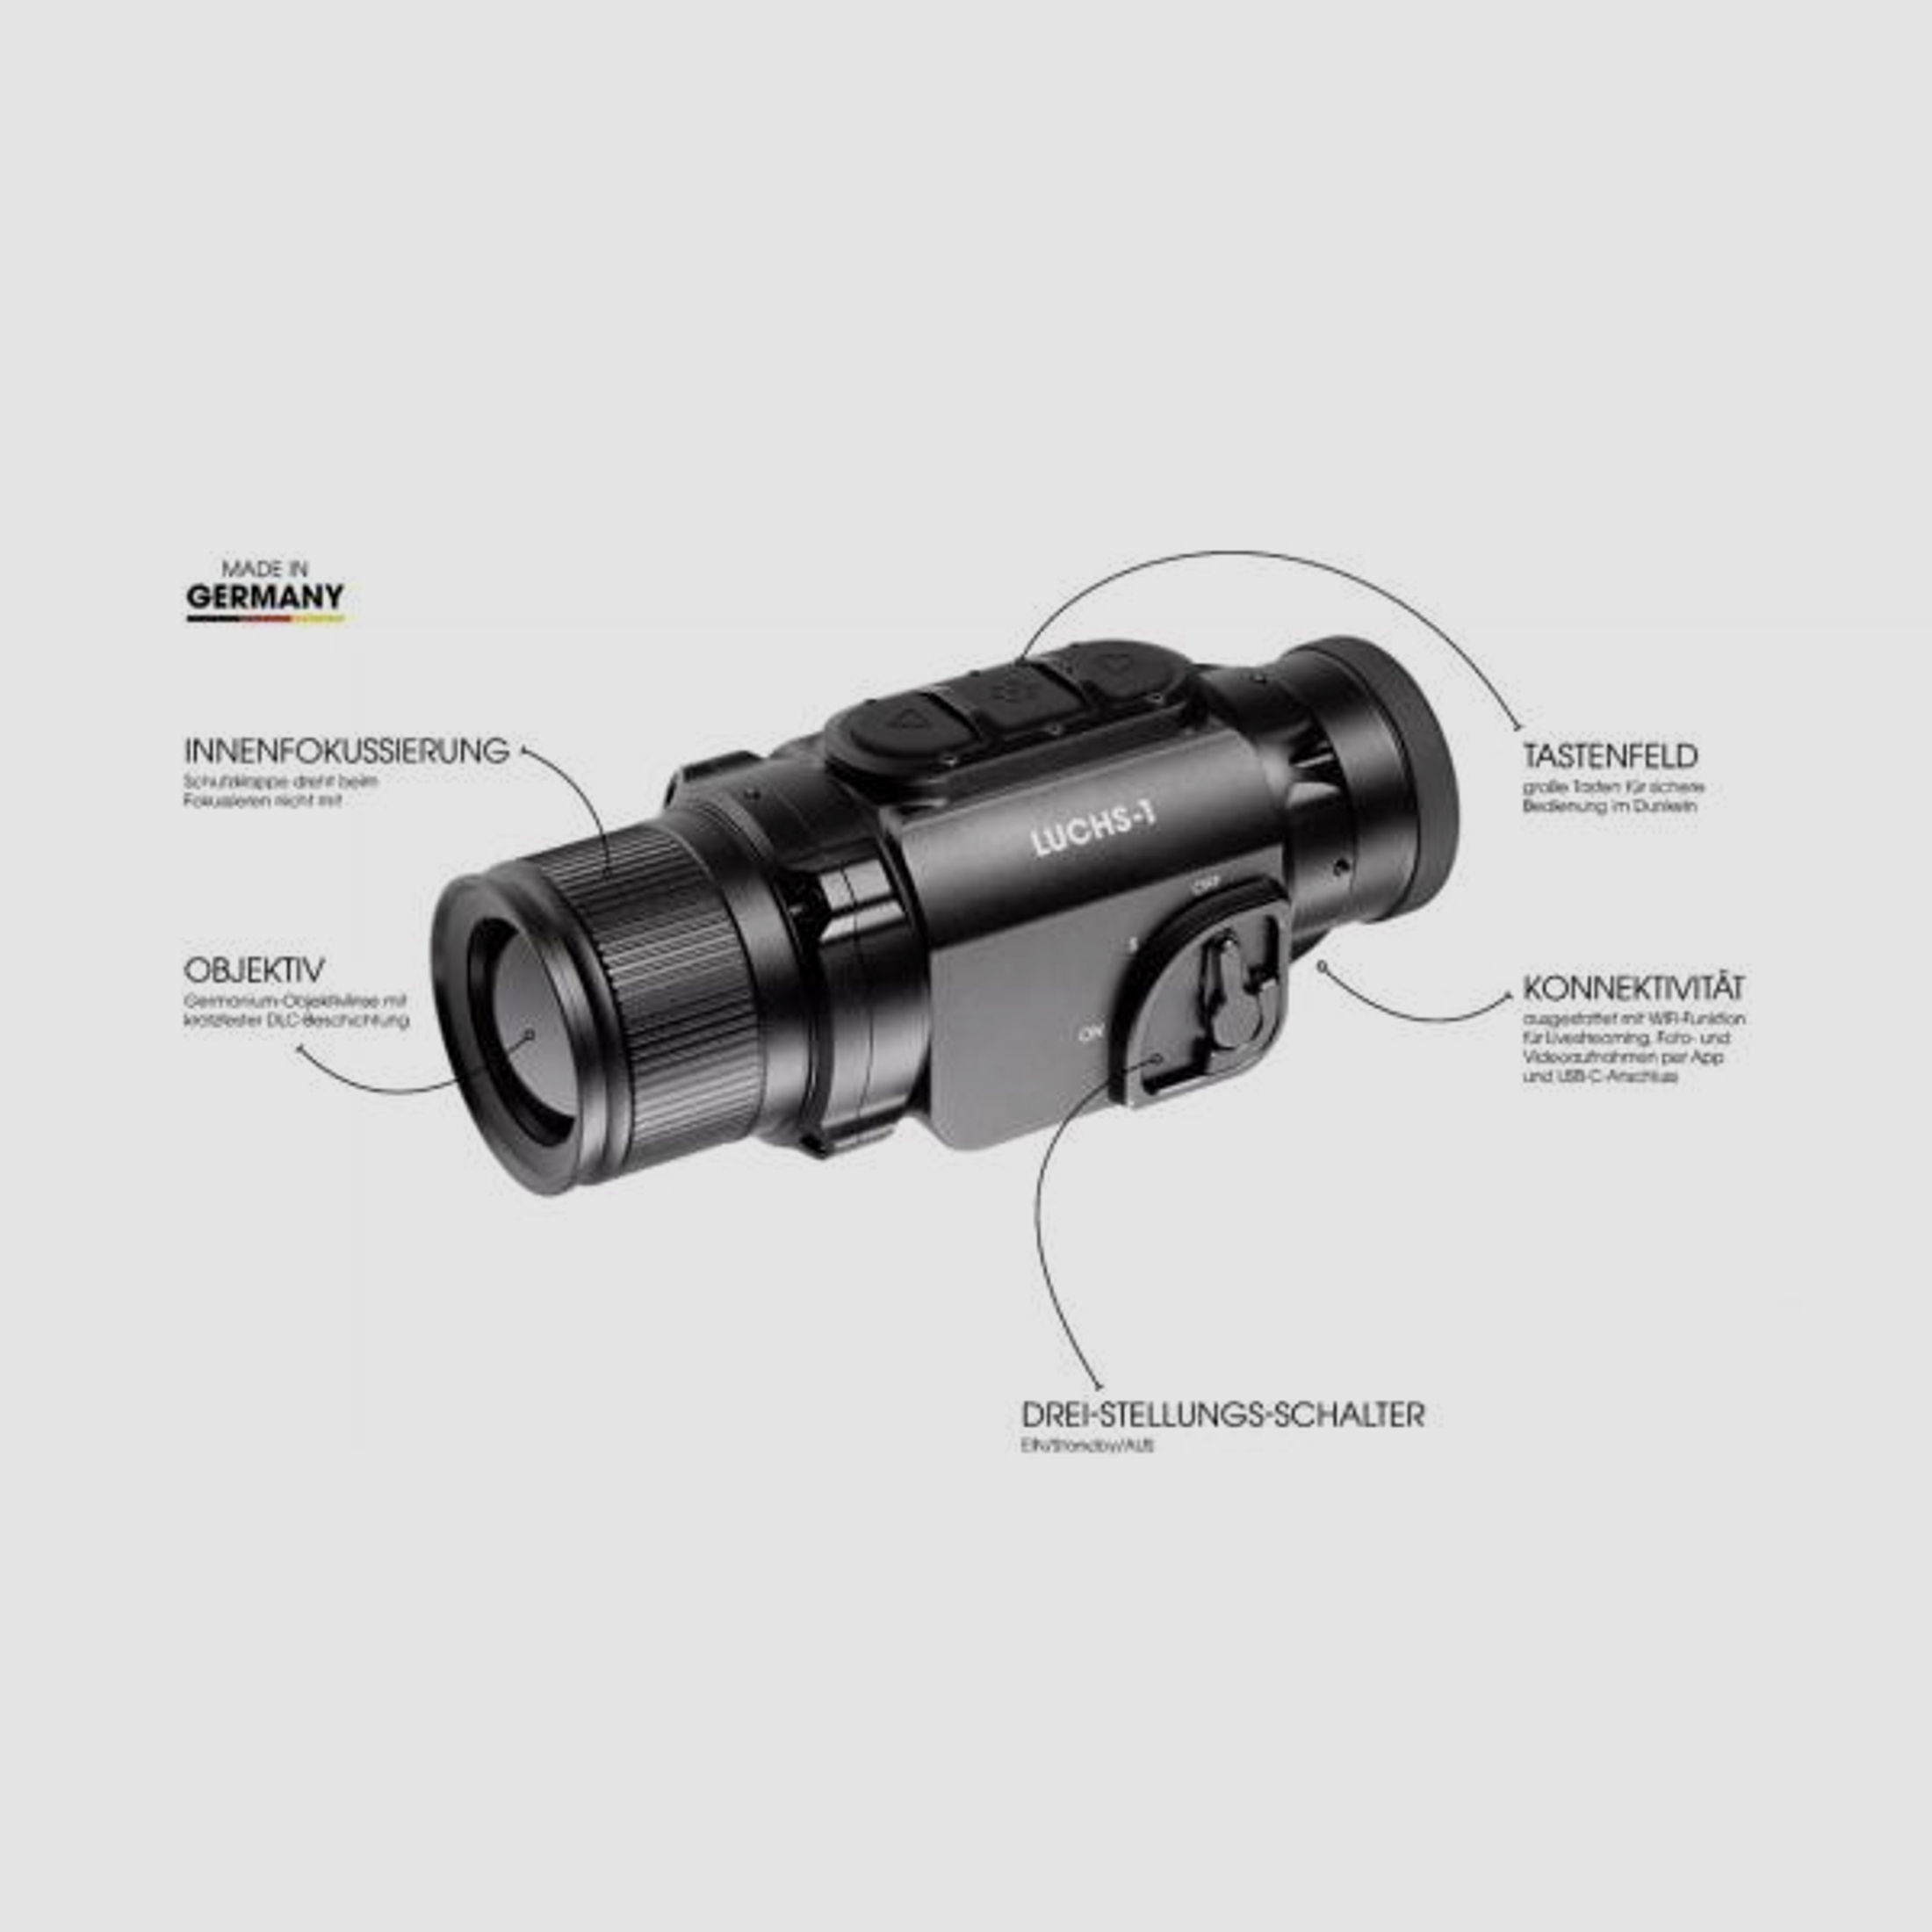 LIEMKE Optik Wärmebild-Kamera Luchs -1 Dual-Use - Vorsatzgerät